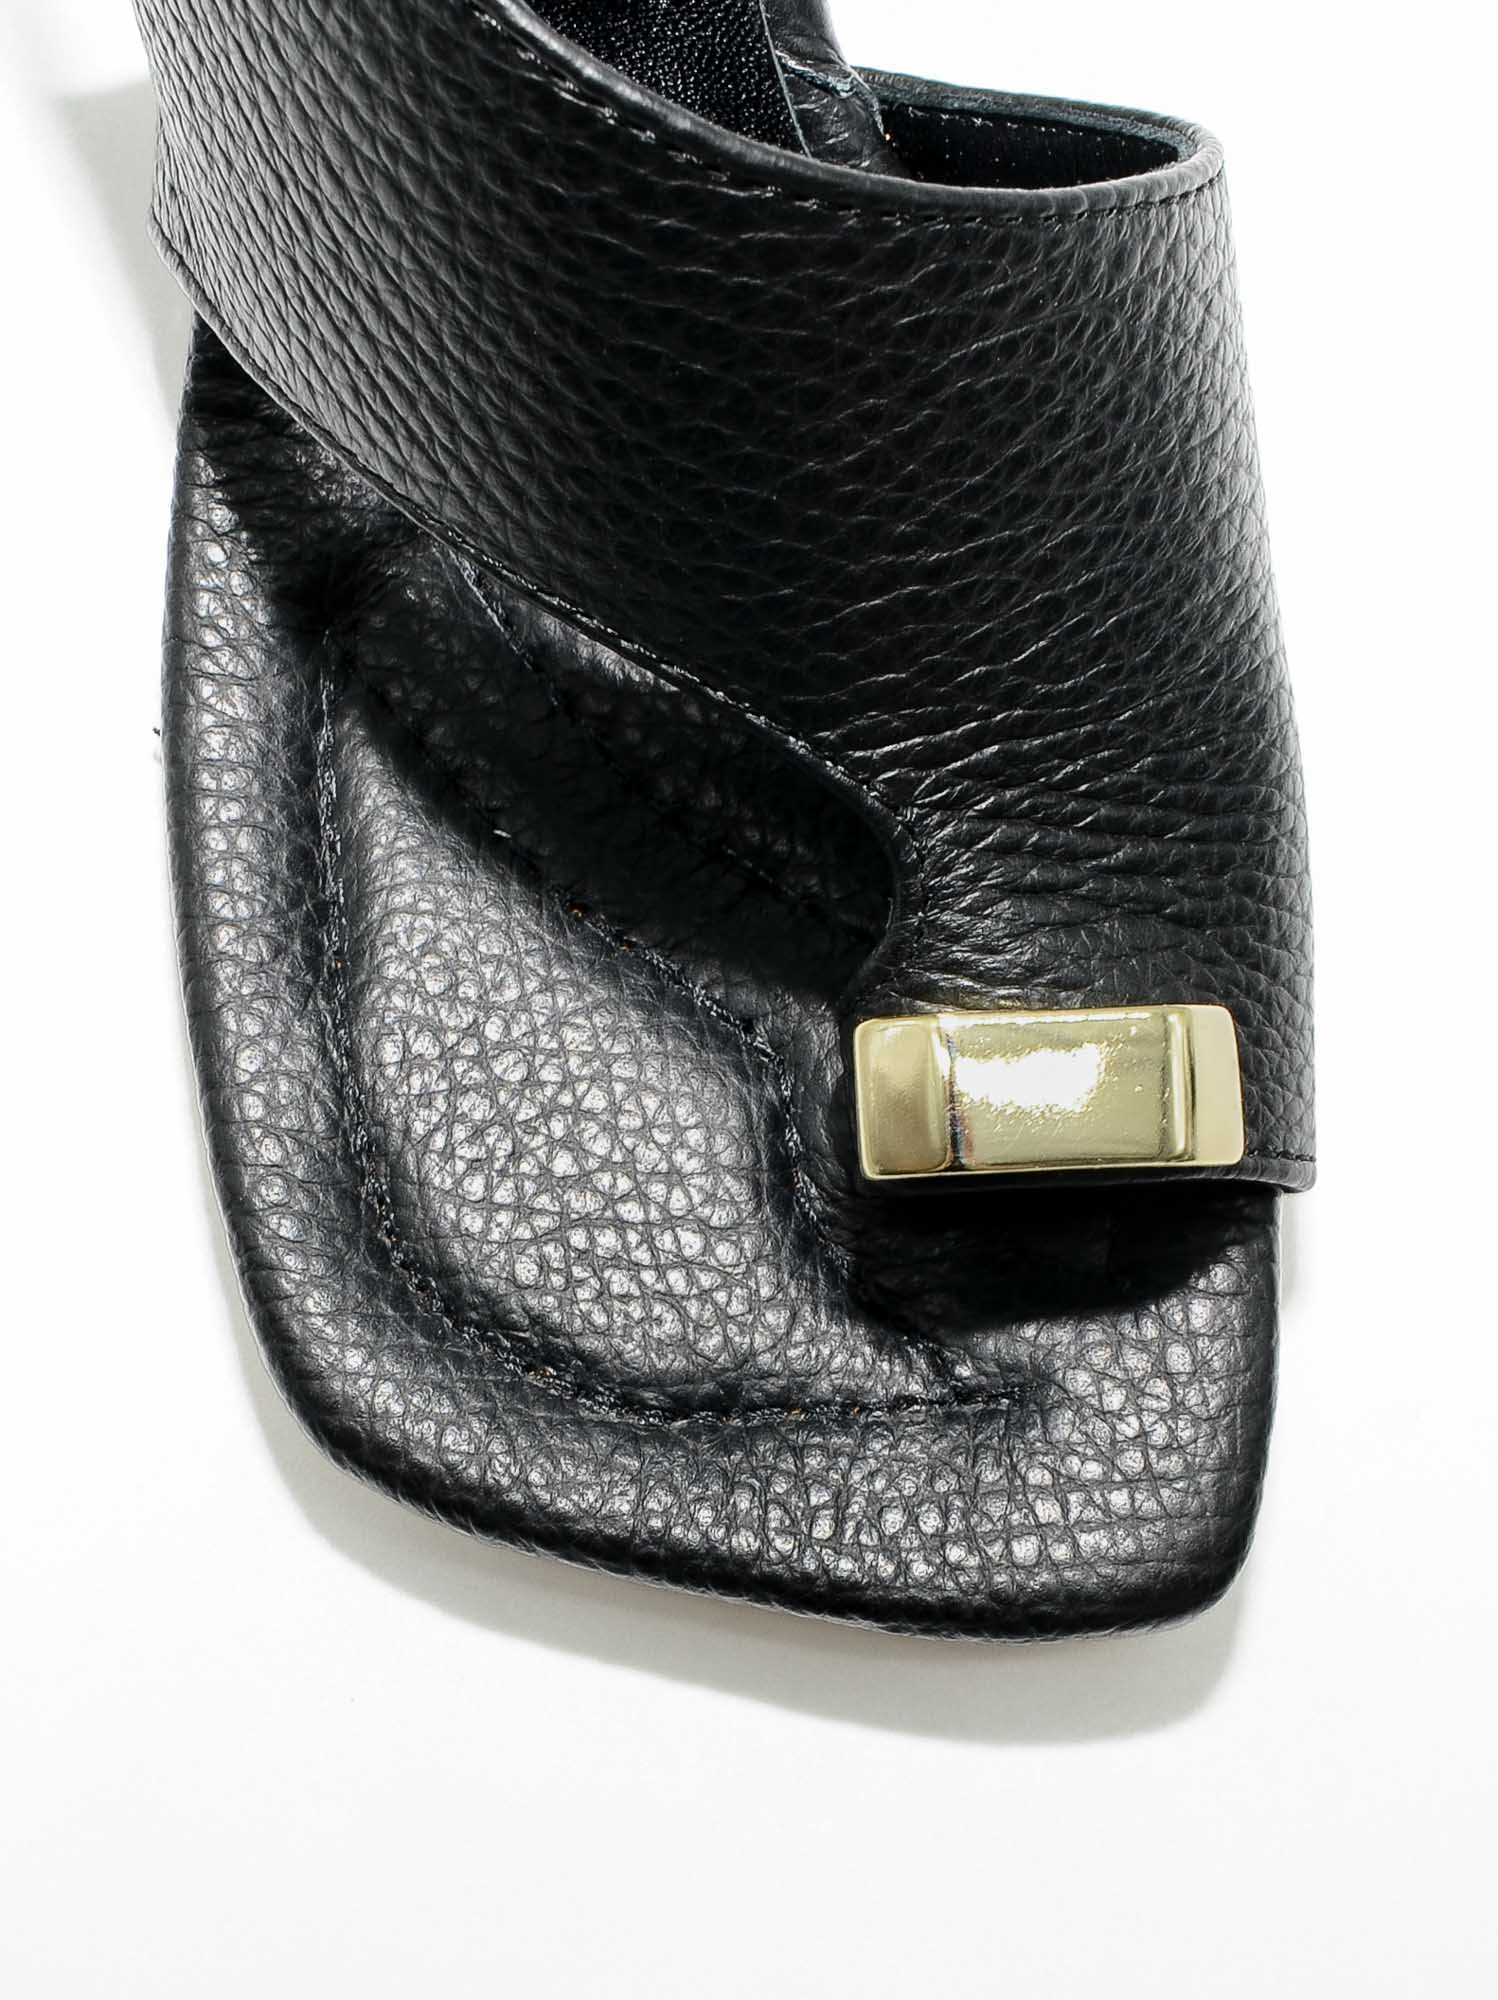 Heel Sandals with Metal Accessory in Black